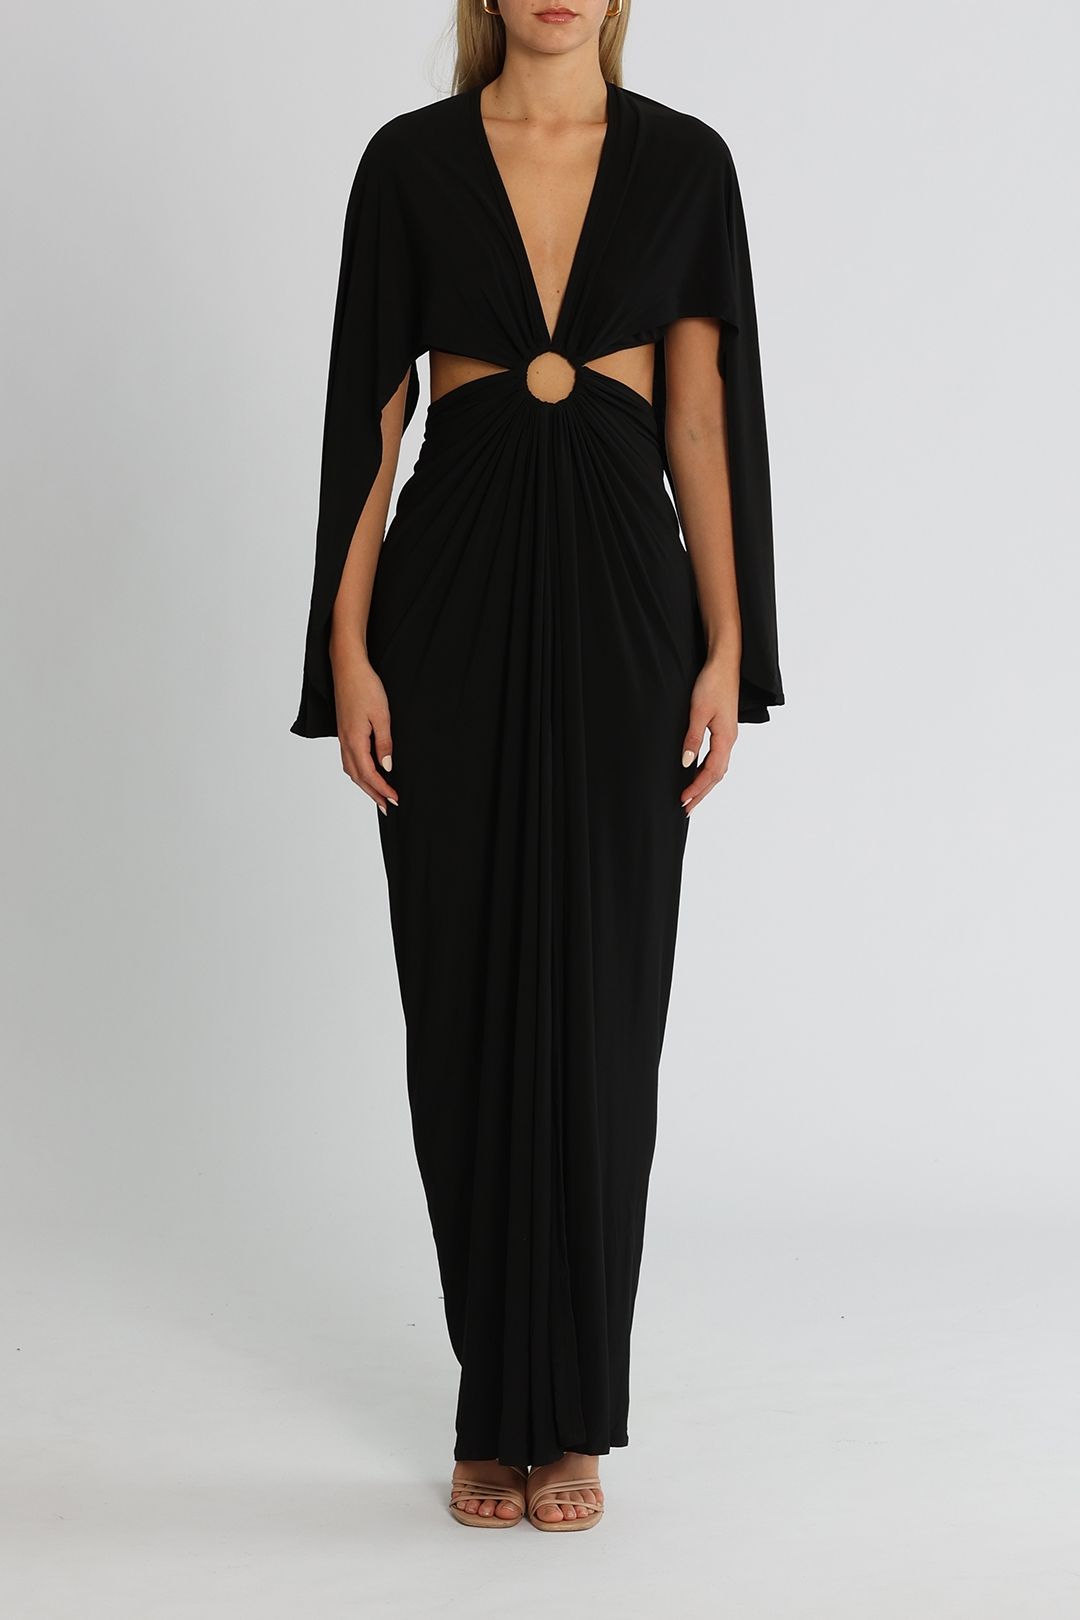 J. Angelique Selena Gown Black